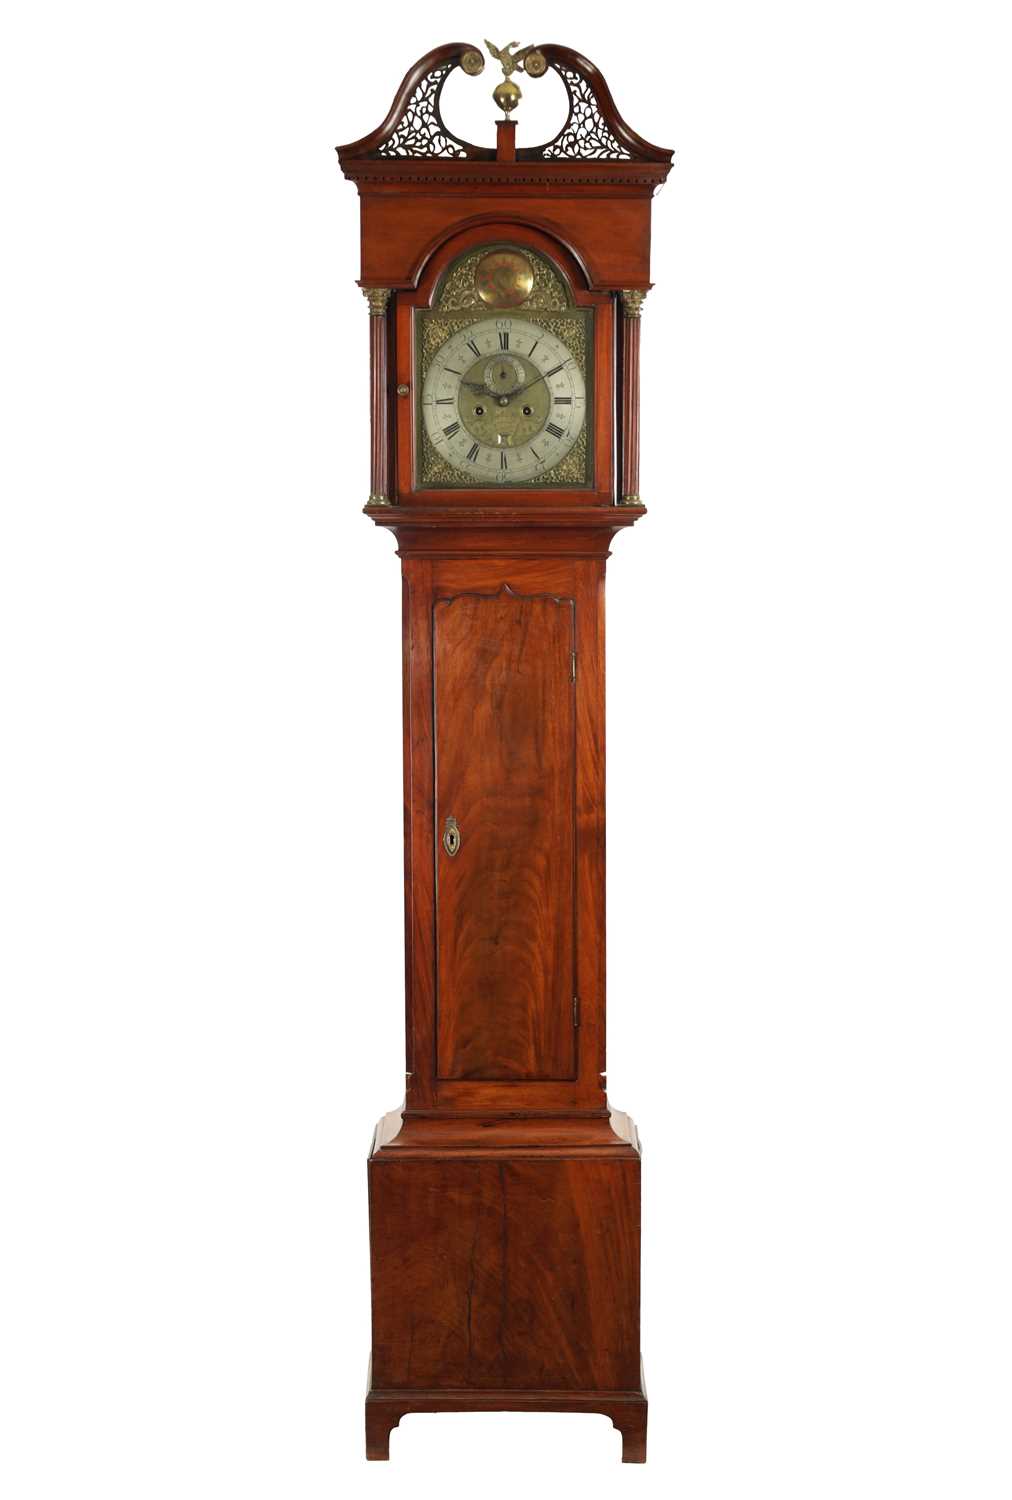 R. HENDERSON, SCARBROUGH. A MID 18TH CENTURY FIGURED MAHOGANY LONGCASE CLOCK